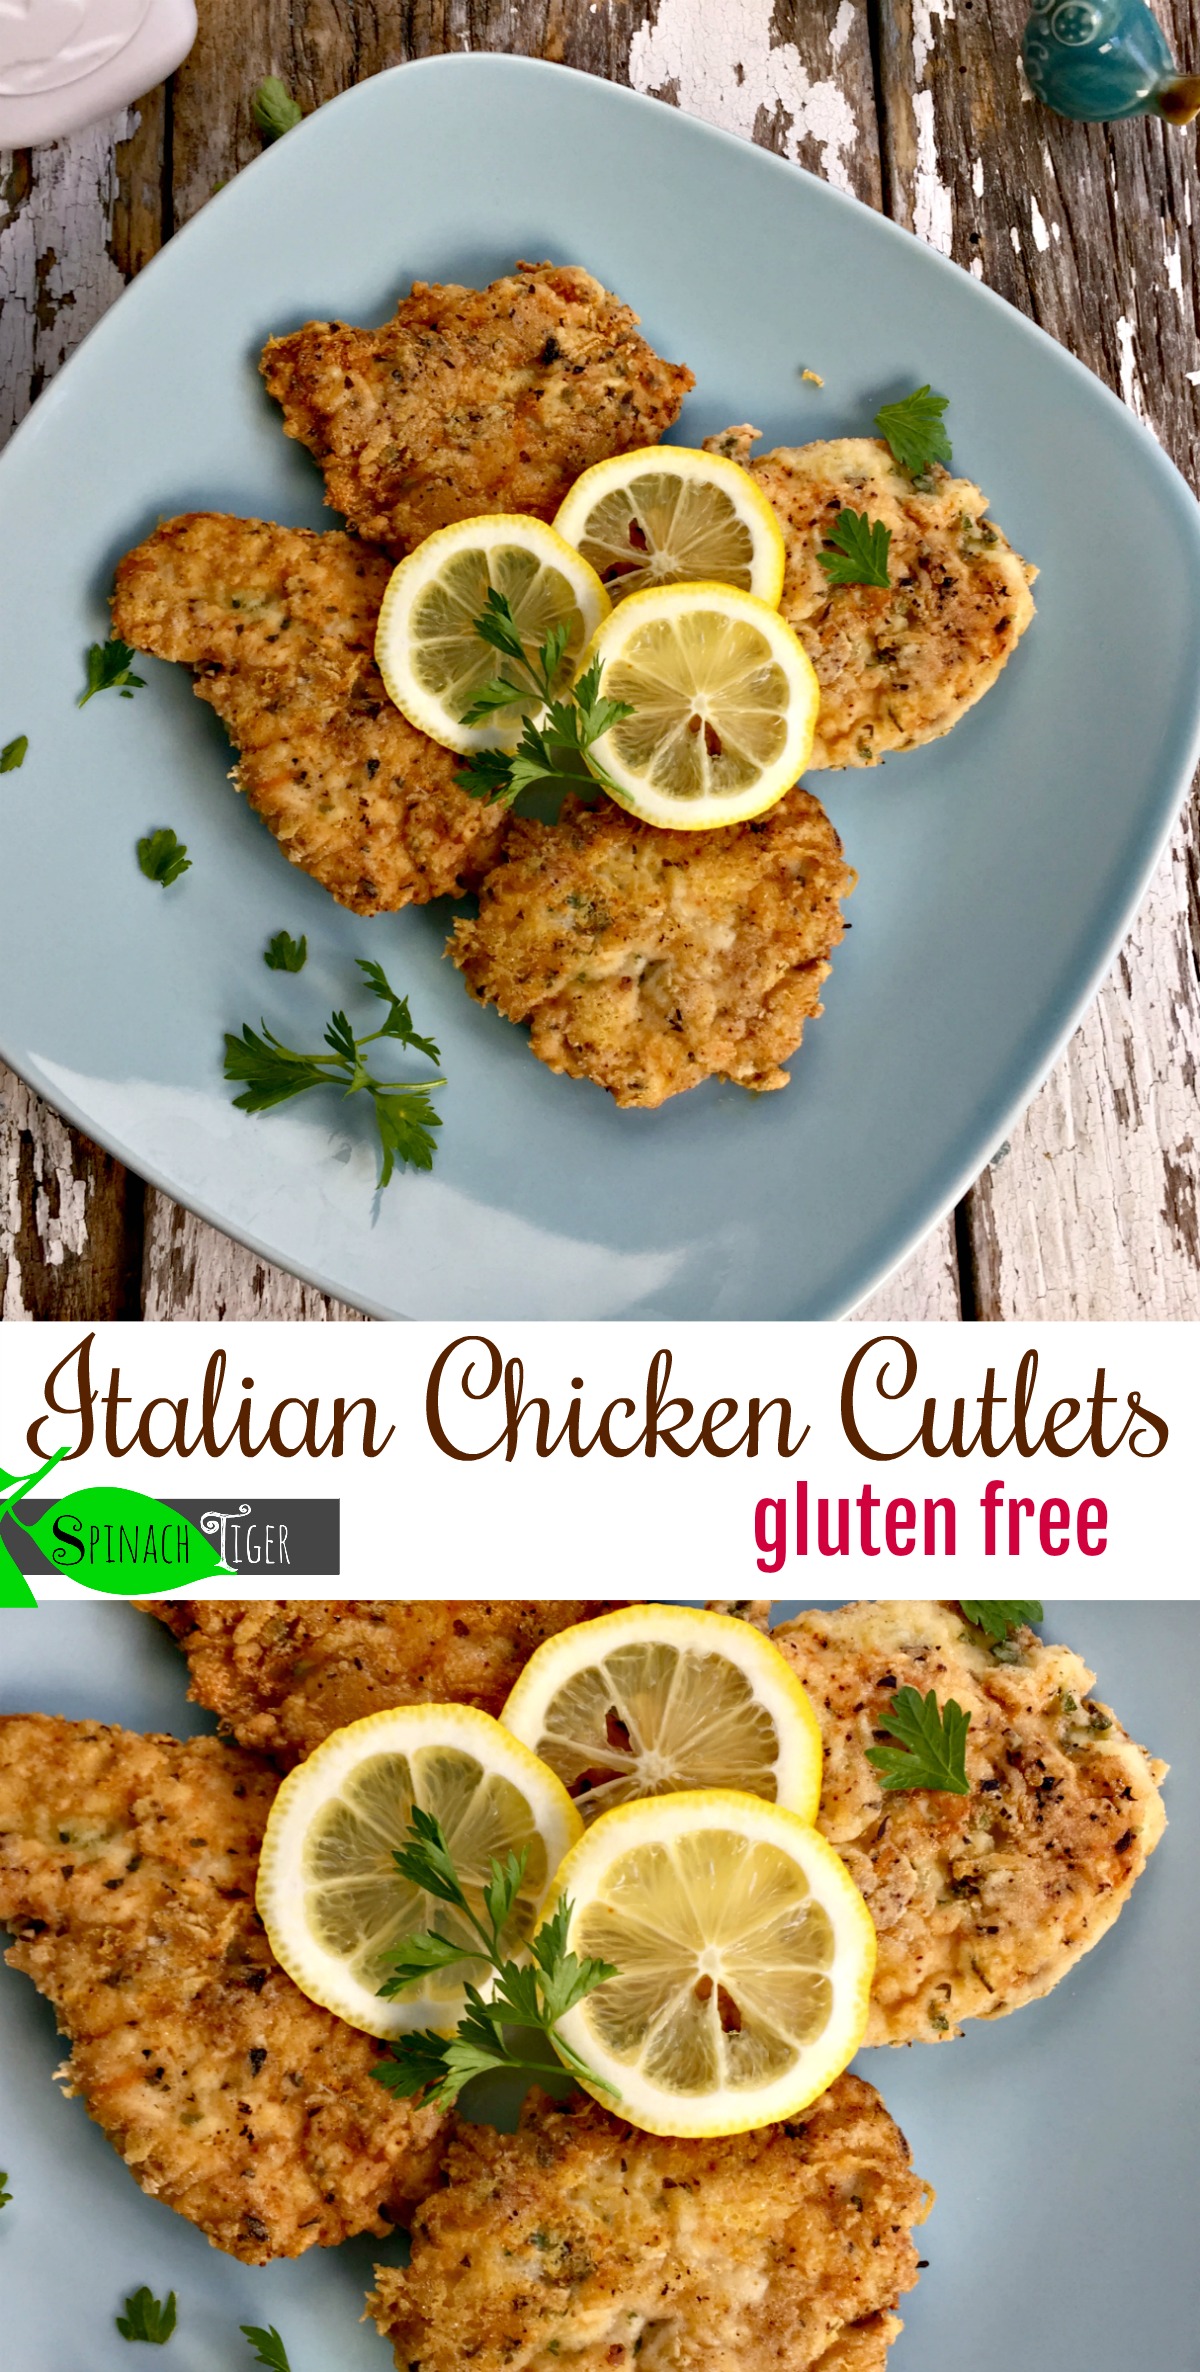 Gluten Free Italian Chicken Cutlets from Spinach Tiger